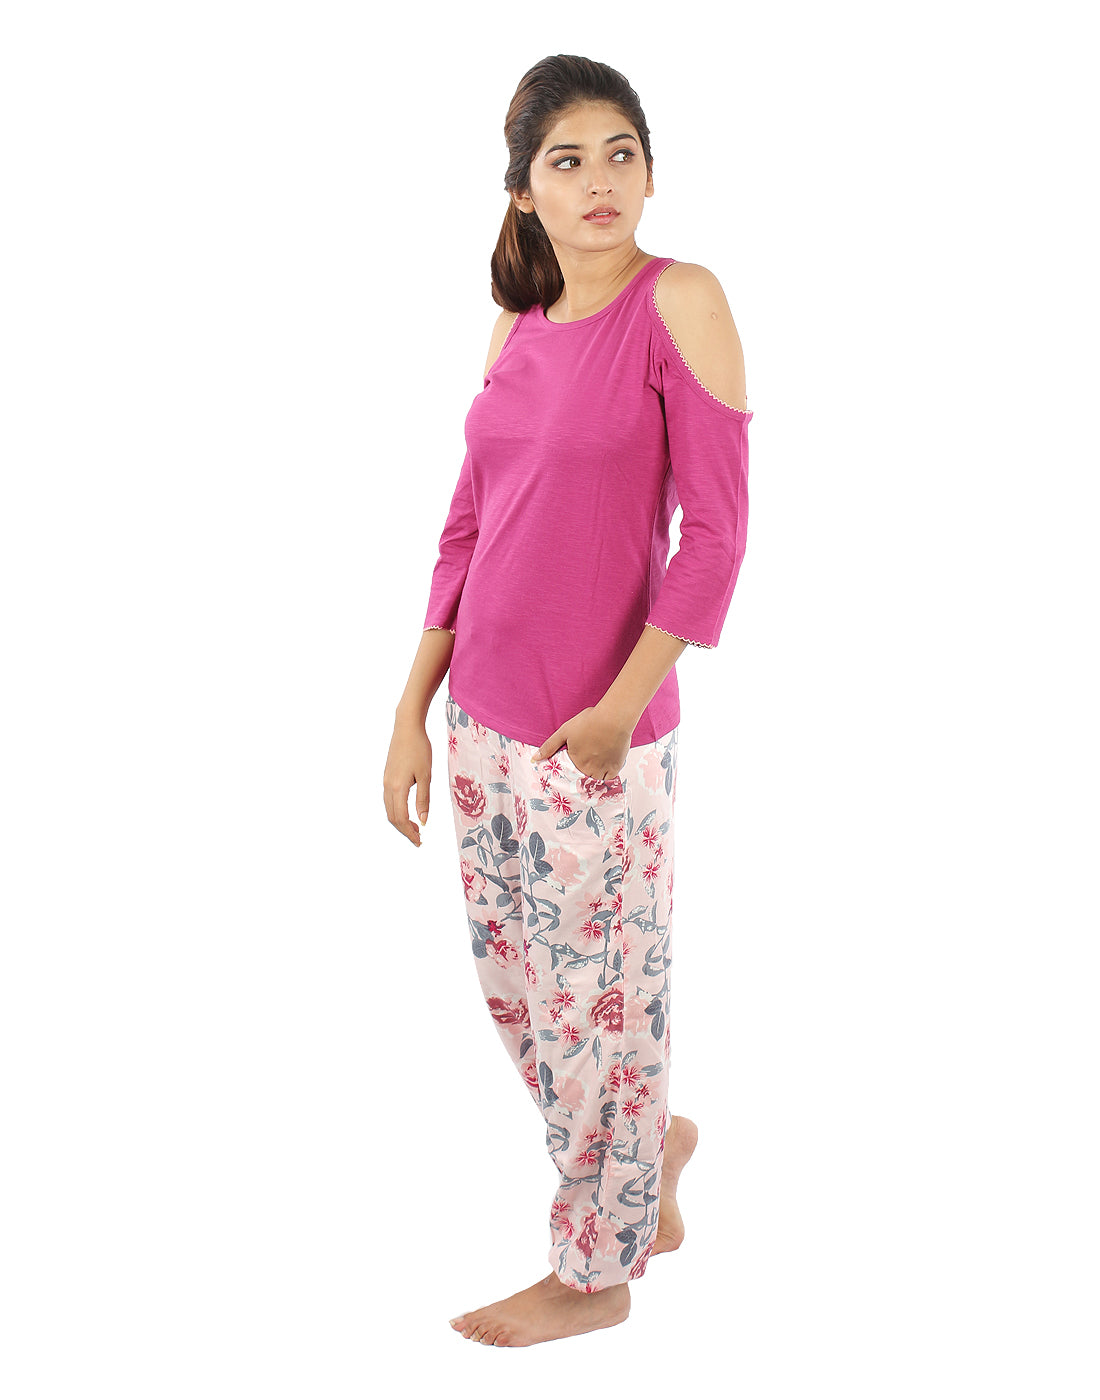 Pyjama Set for Women-Pink Solid